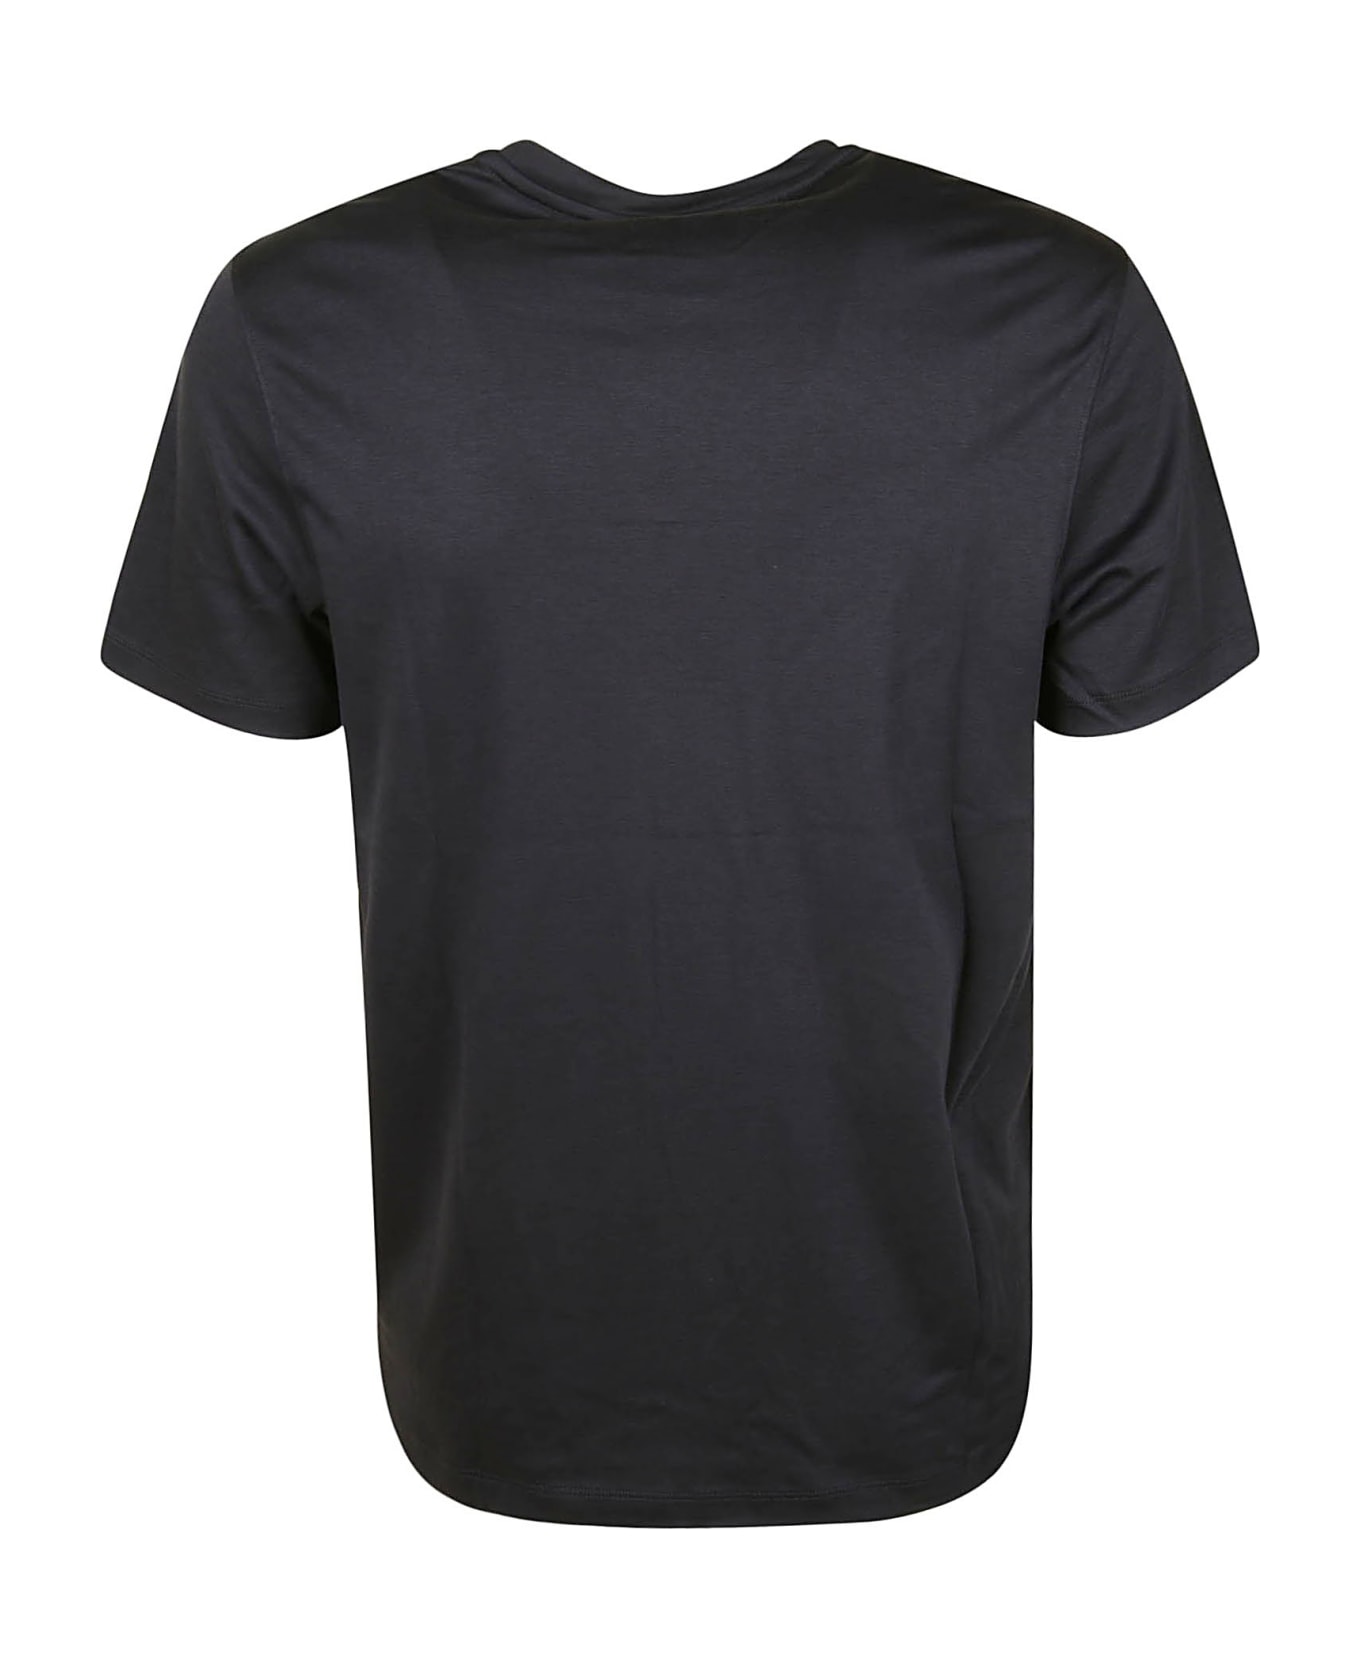 Michael Kors Spring 22 T-shirt - Black